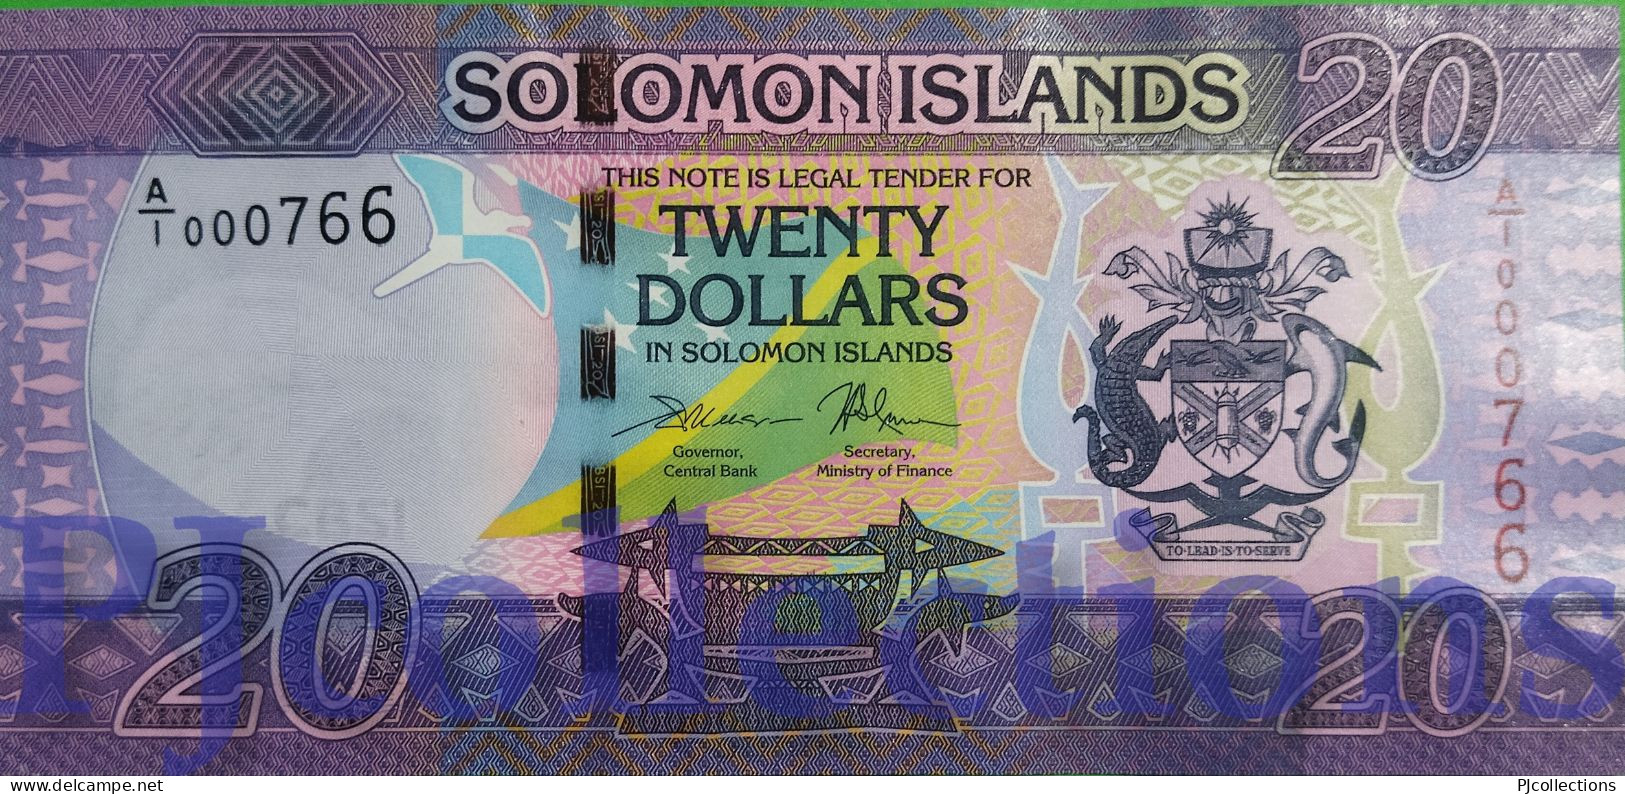 SOLOMON ISLANDS 20 DOLLARS 2017 PICK 34 UNC LOW SERIAL NUMBER "A/1 000766" - Salomons